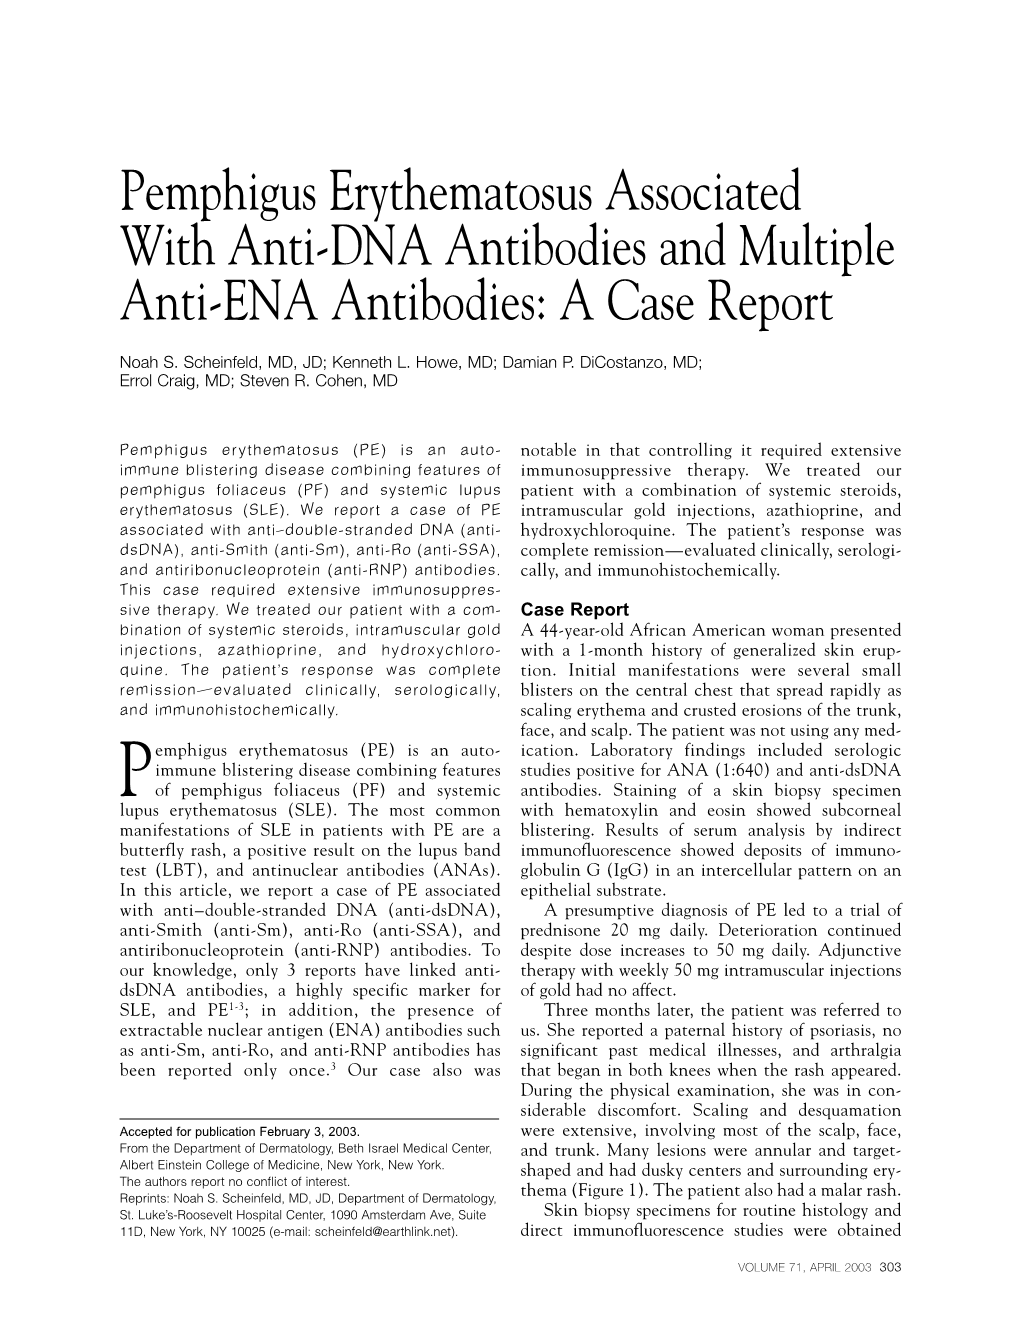 Pemphigus Erythematosus Associated with Anti-DNA Antibodies and Multiple Anti-ENA Antibodies: a Case Report